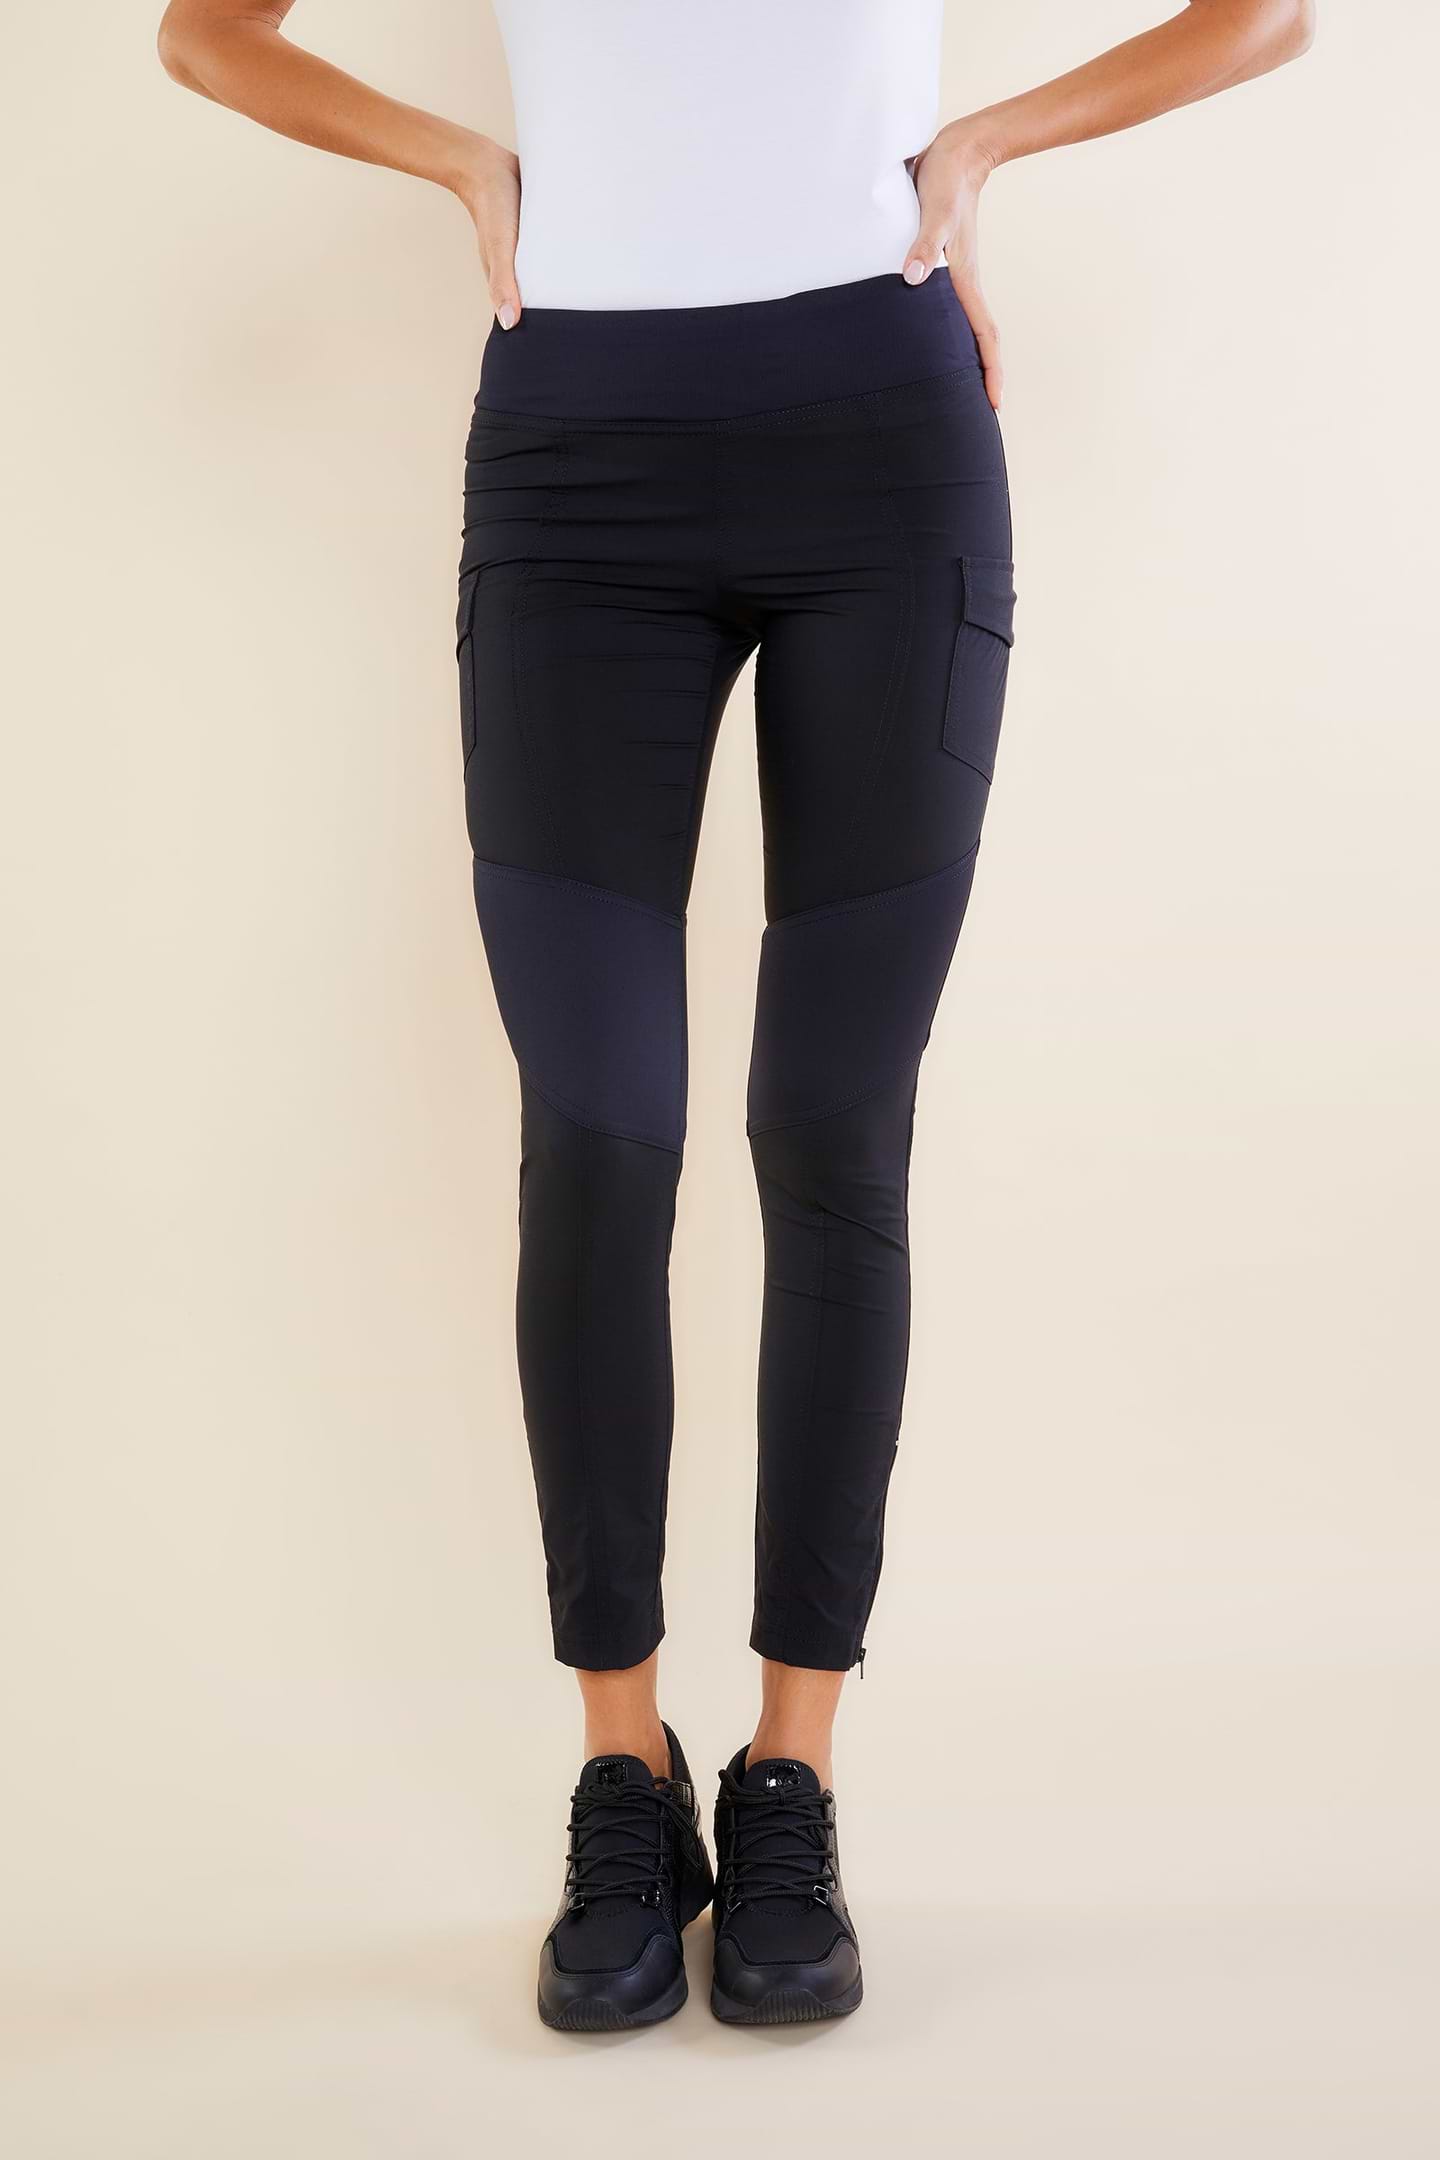 NoName Leggings Gray/Black M WOMEN FASHION Trousers Leggings Capri discount 92% 